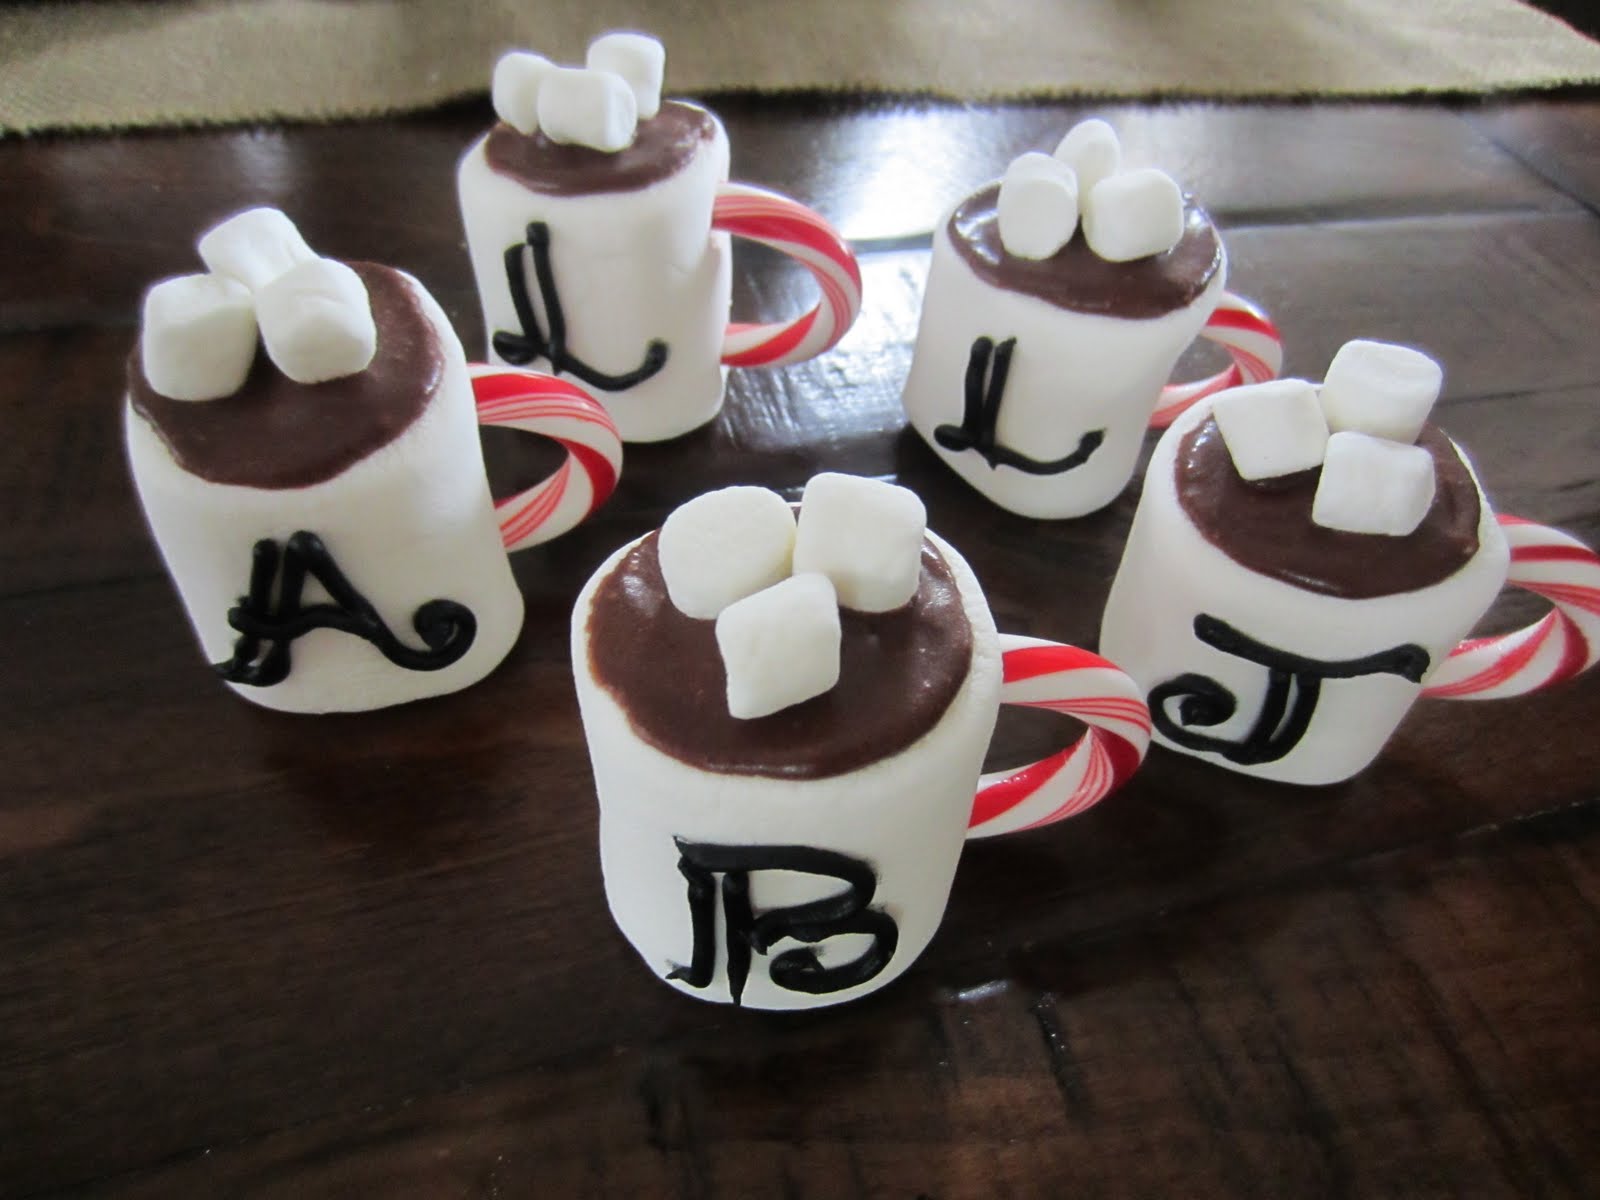 Marshmallow Hot Chocolate Mug